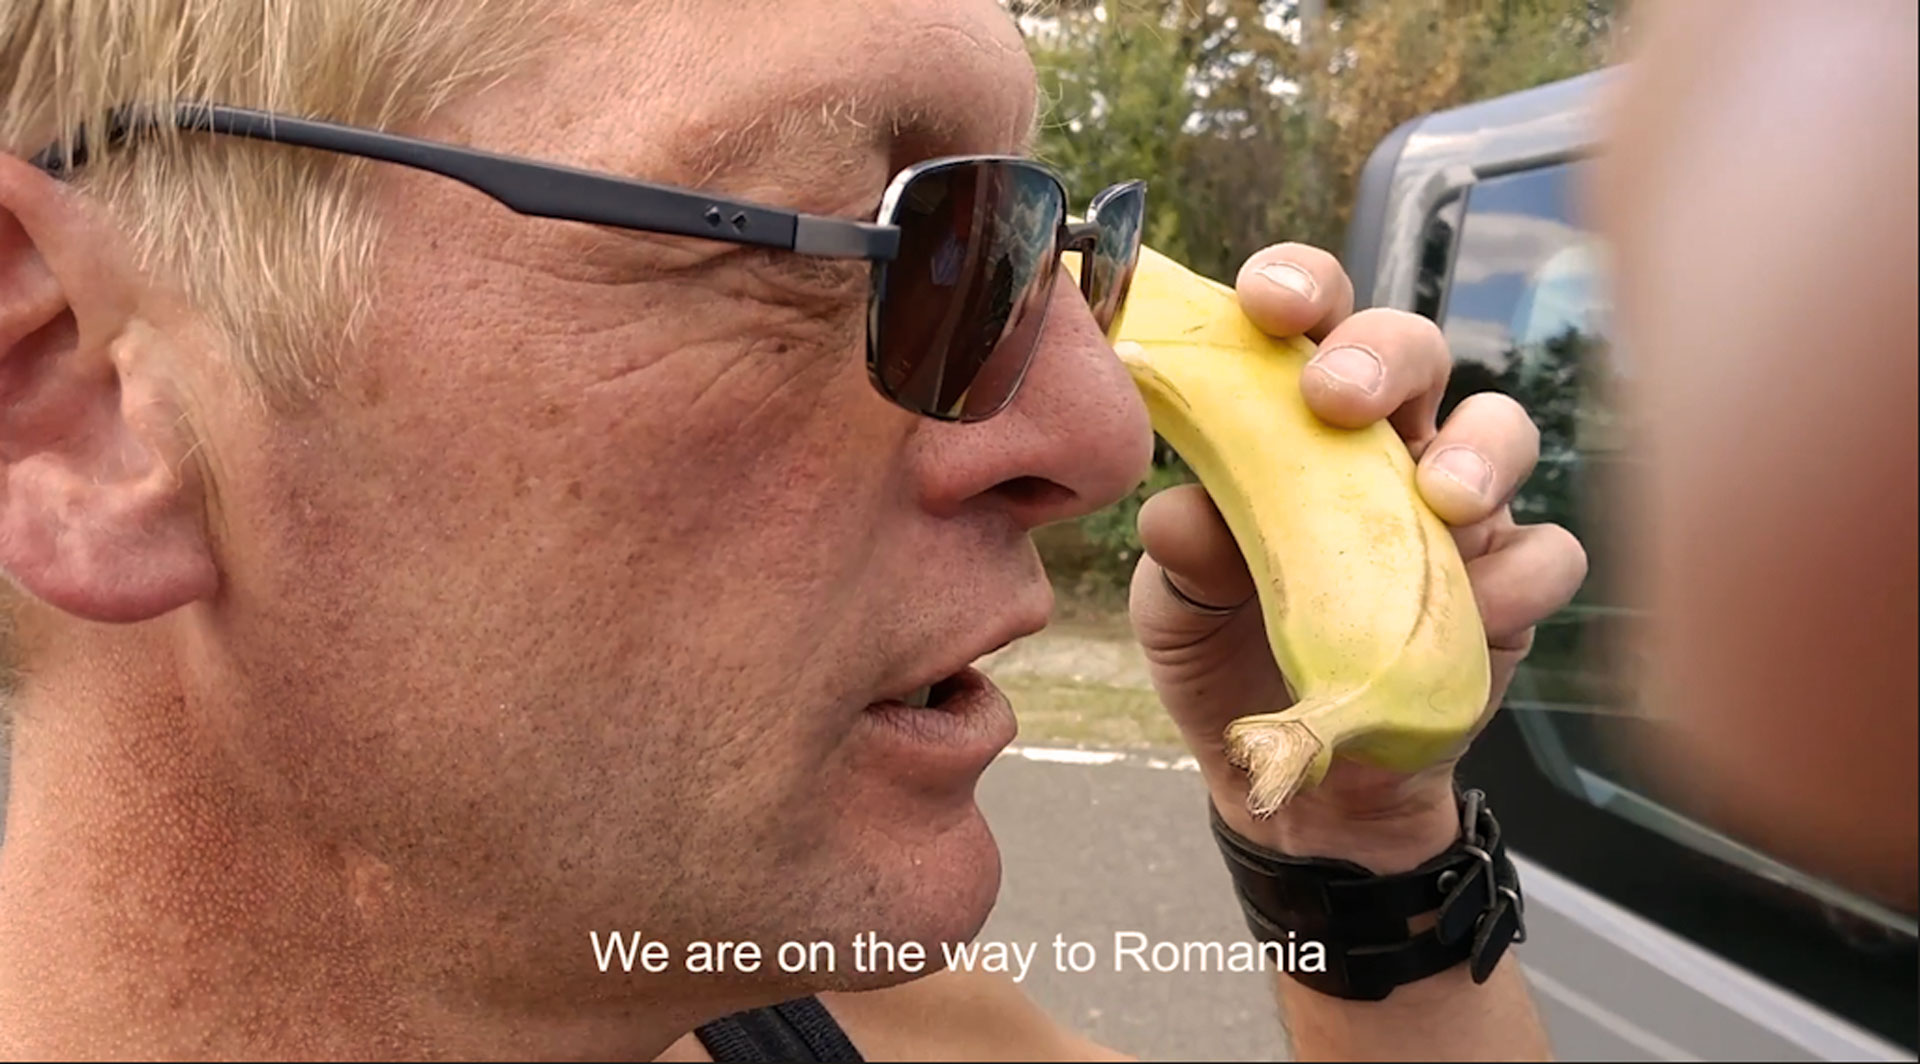 Steve making a phone call with a banana